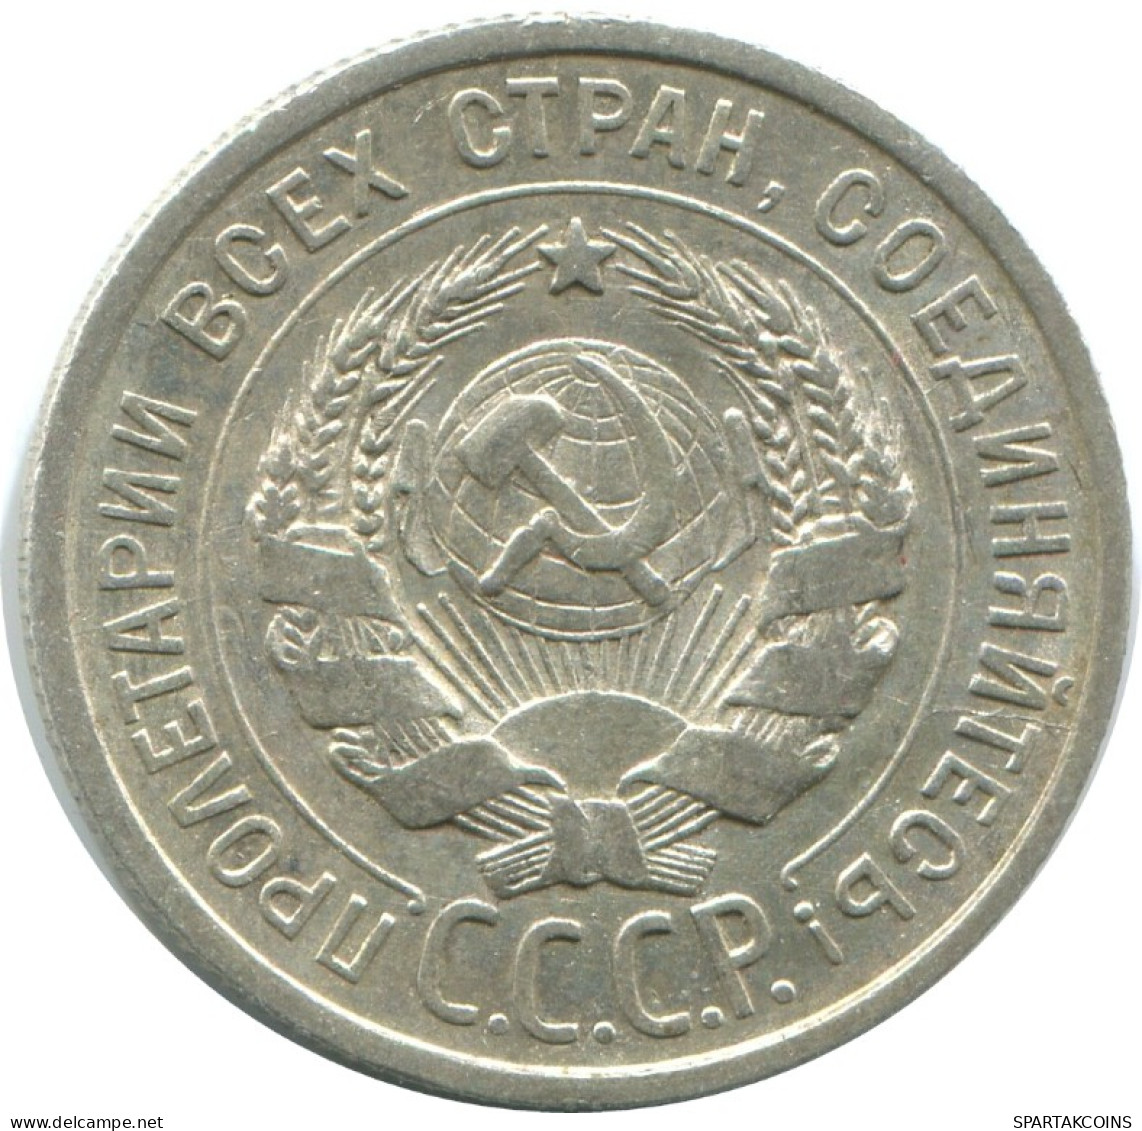 20 KOPEKS 1925 RUSIA RUSSIA USSR PLATA Moneda HIGH GRADE #AF318.4.E.A - Rusia